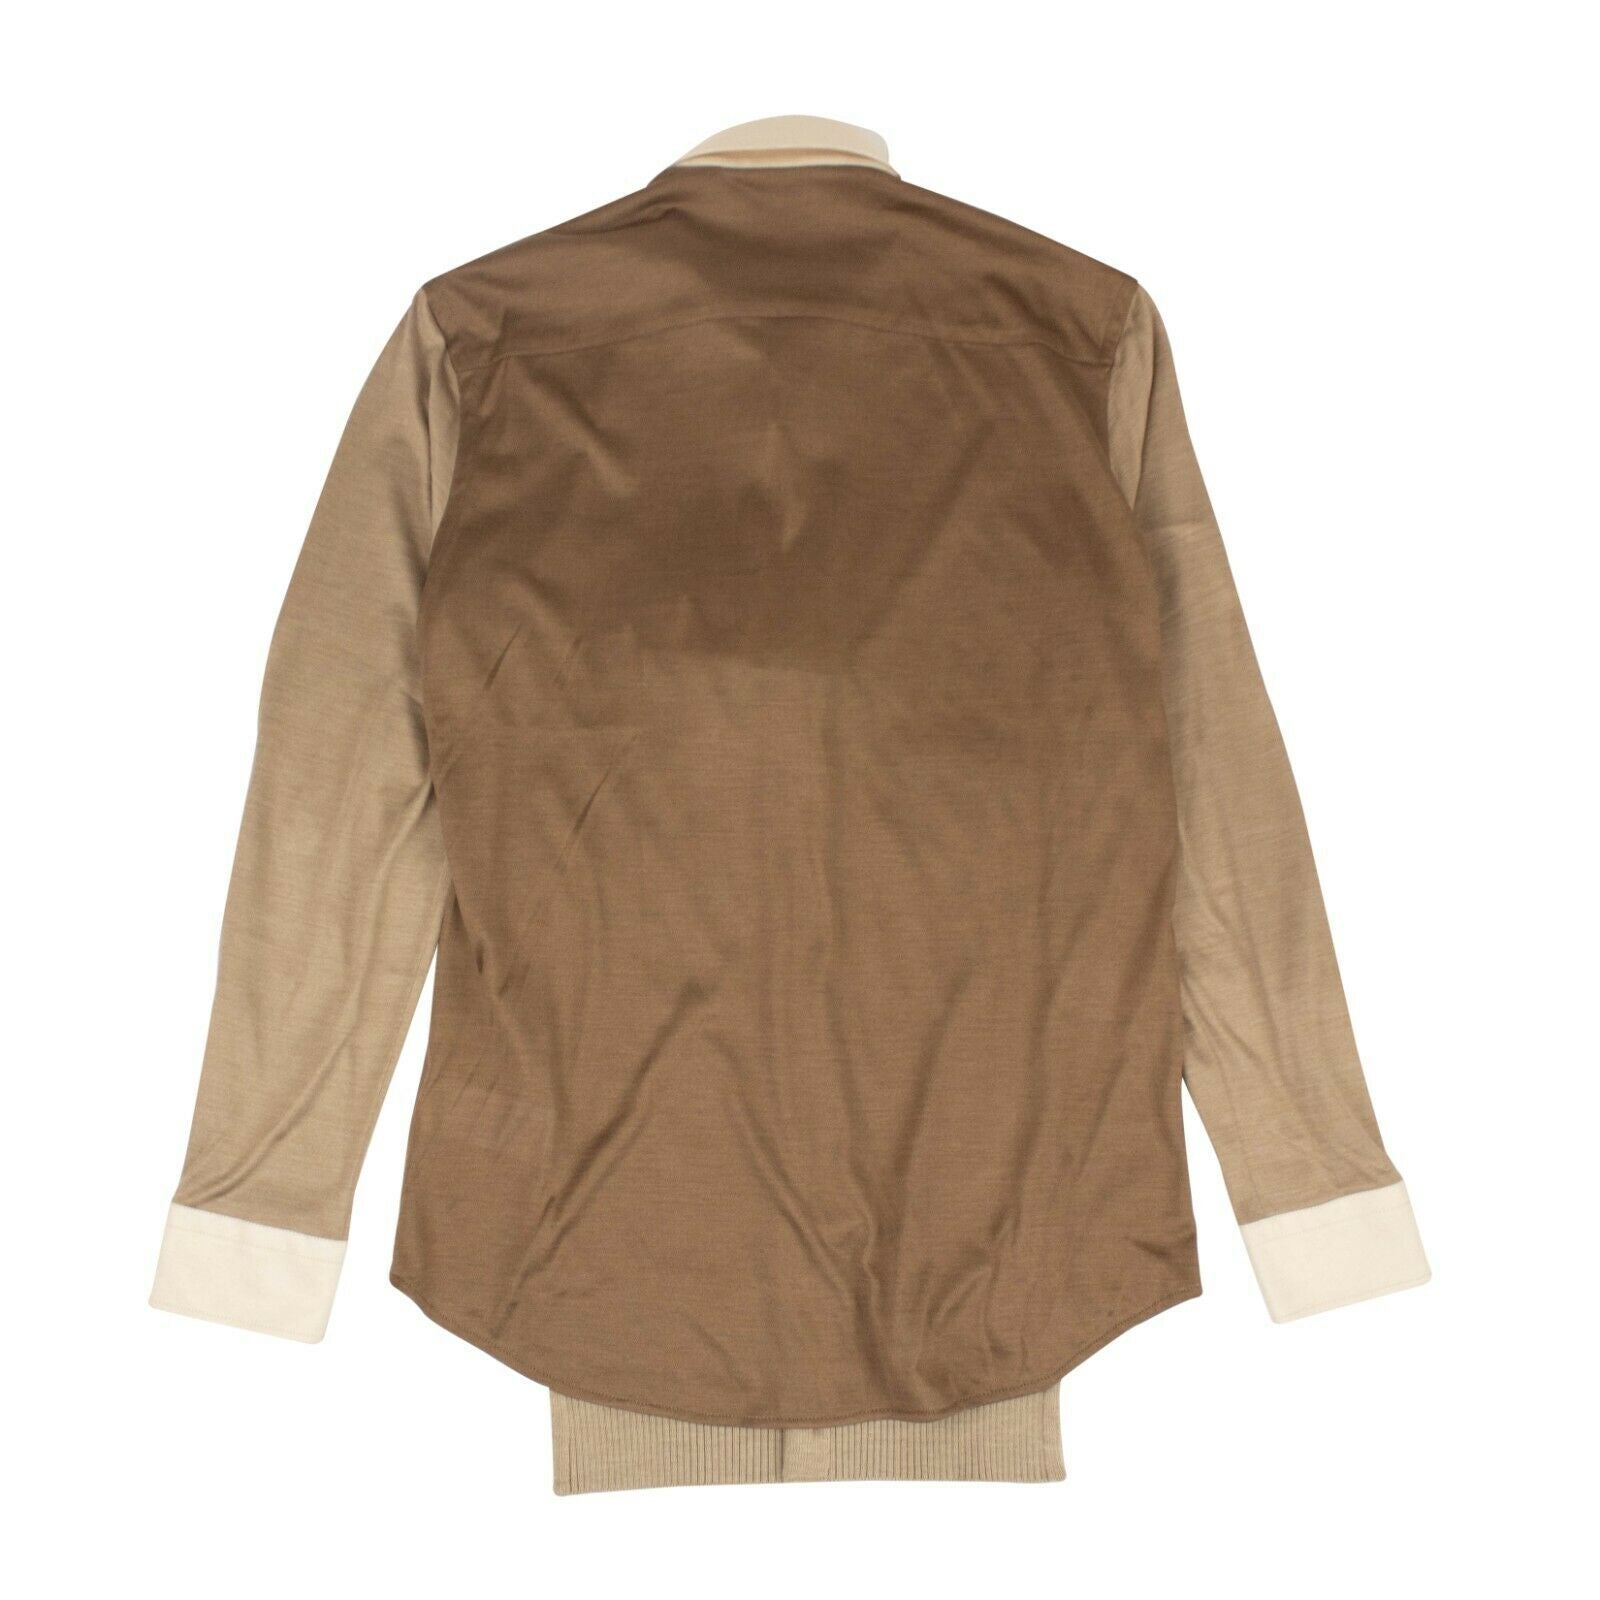 Burberry Multicolor Collar Shirt - Tan/Brown